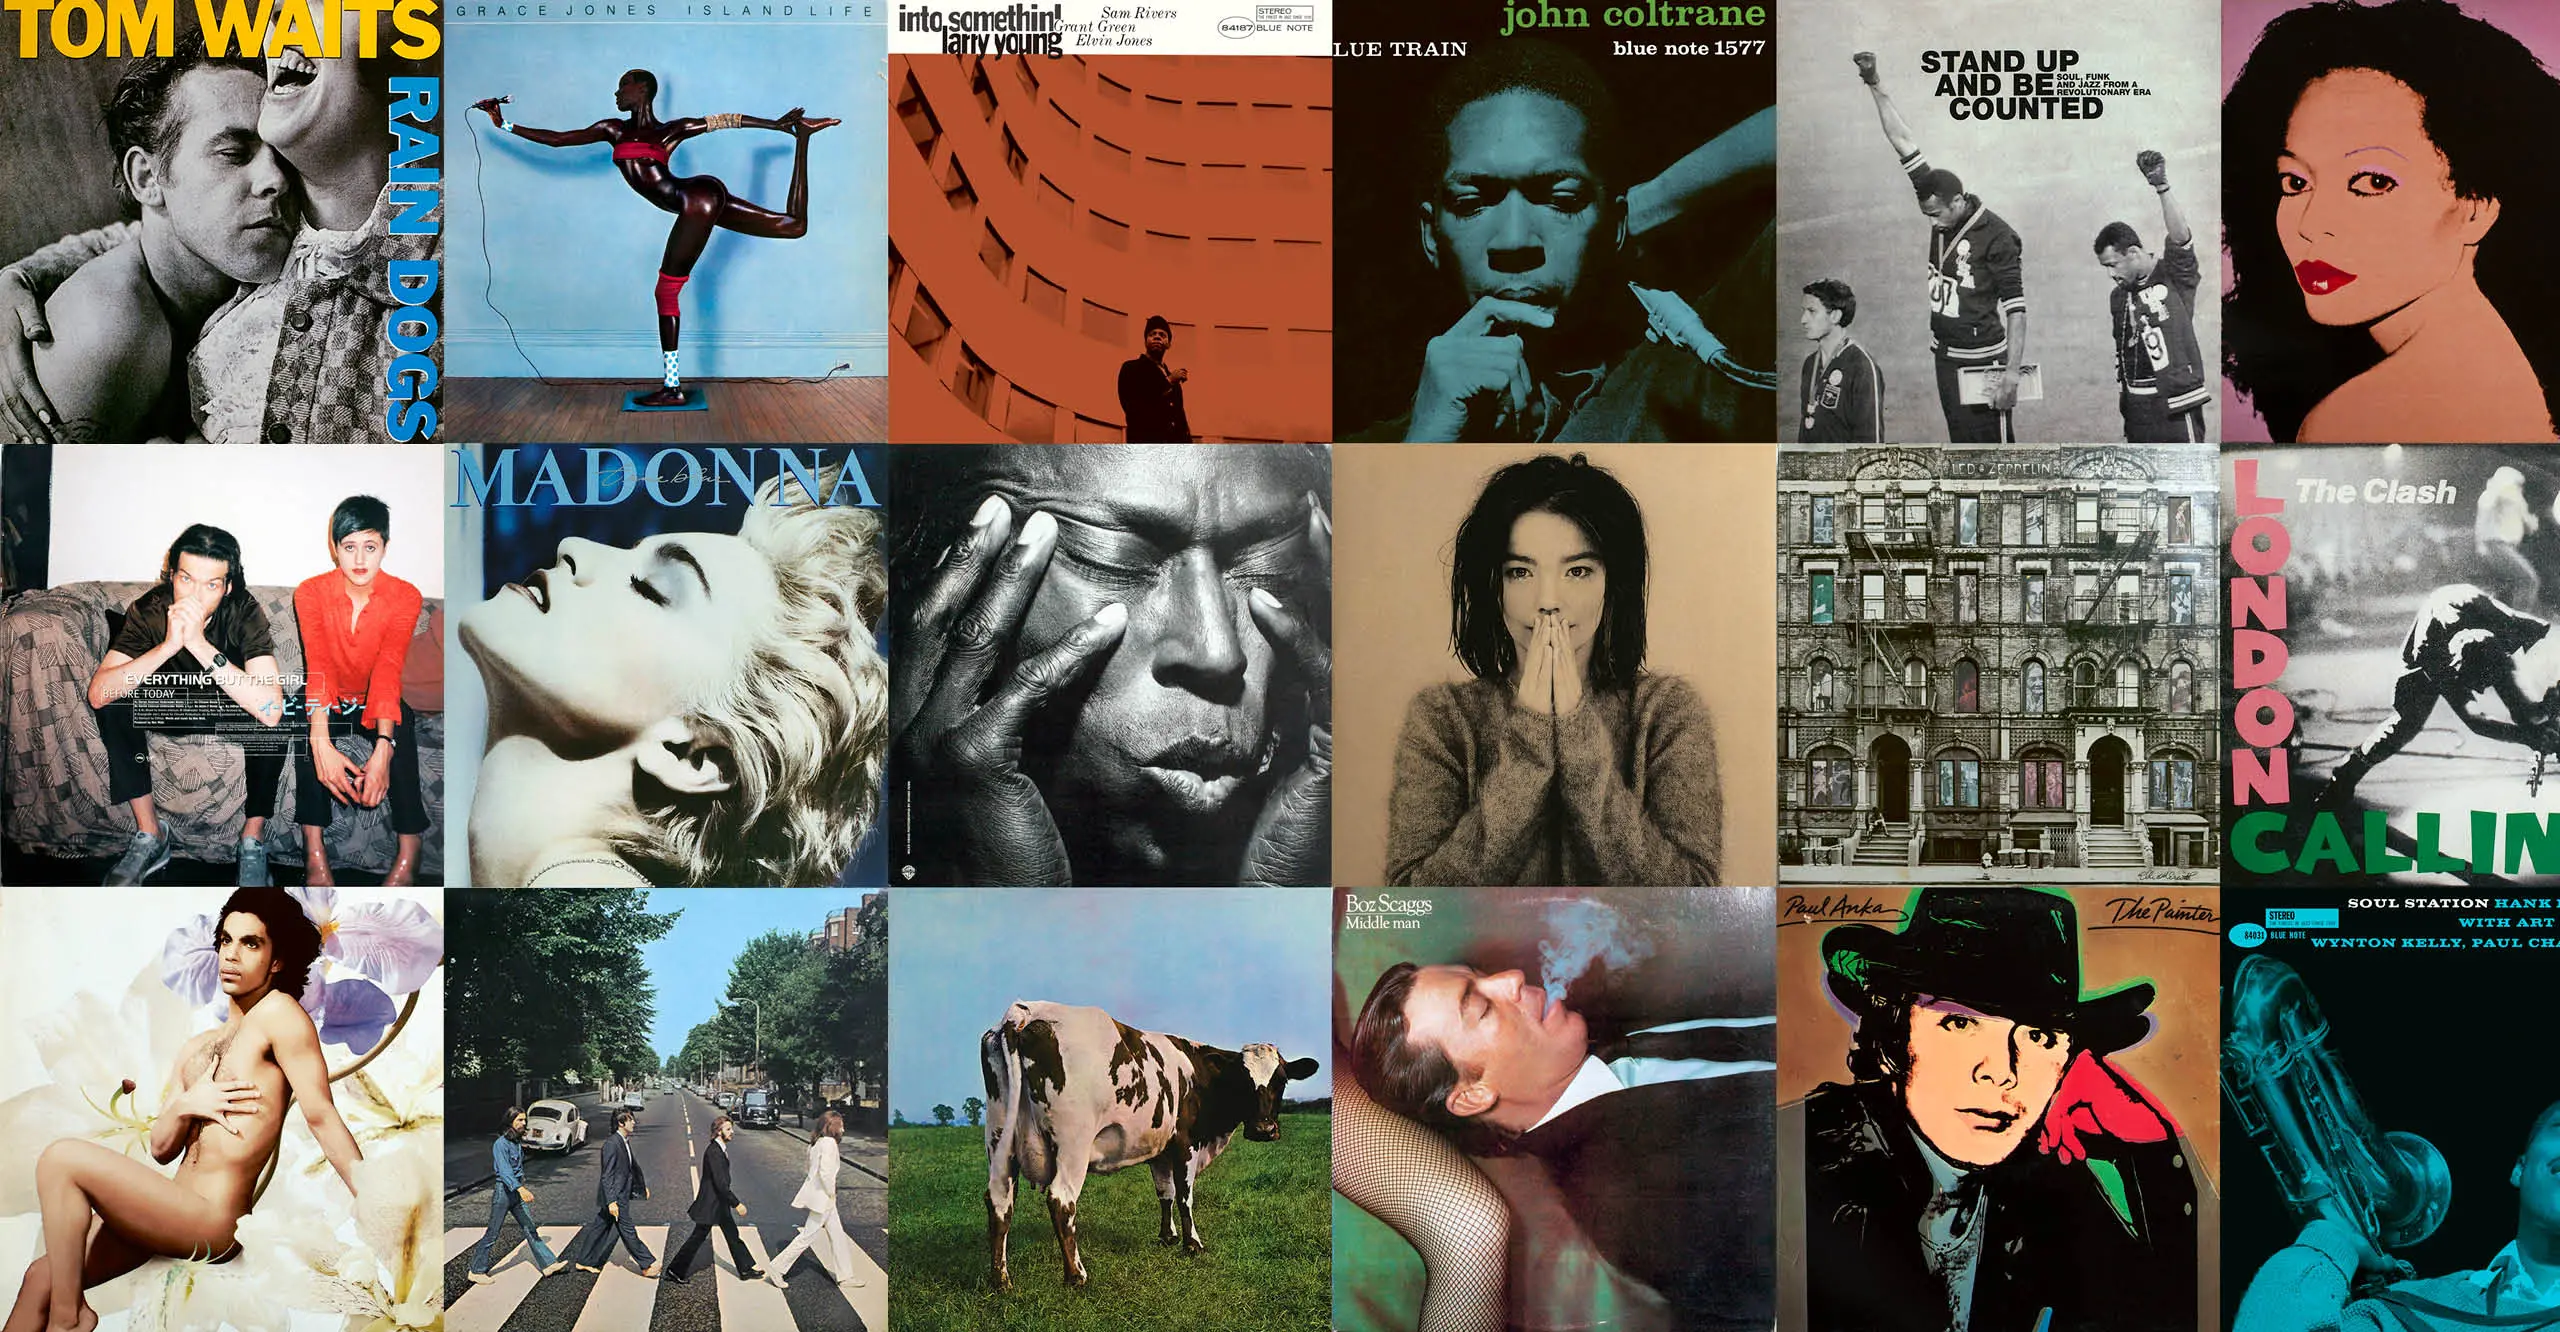 image grid of several vinyl album covers